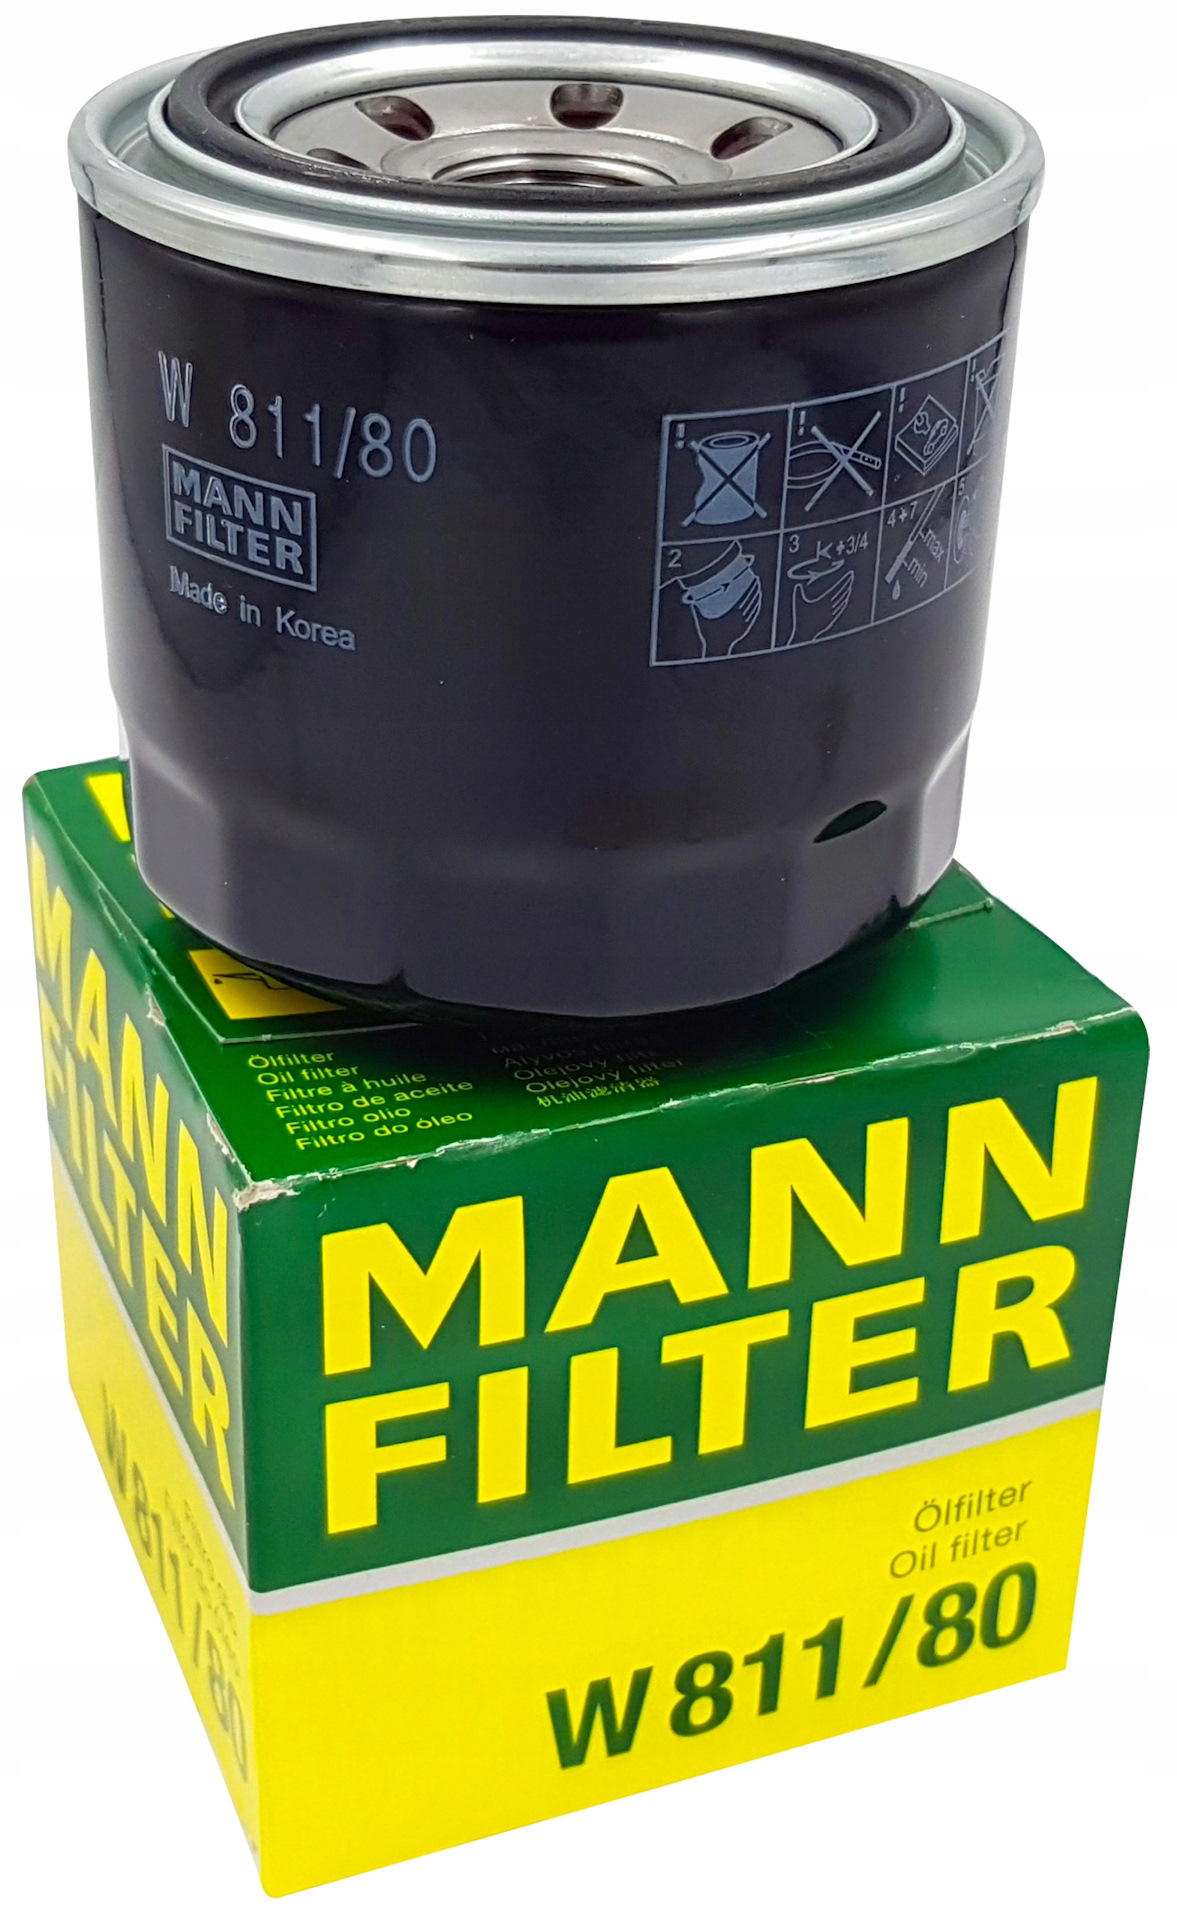 80 filter. Фильтр масляный Манн 811/80. Hyundai Solaris фильтр масляный Манн 811. W81180 Mann-Filter фильтр масляный Mann w 811/80. Фильтр масляный Хендай / Киа(w 811/80 ).